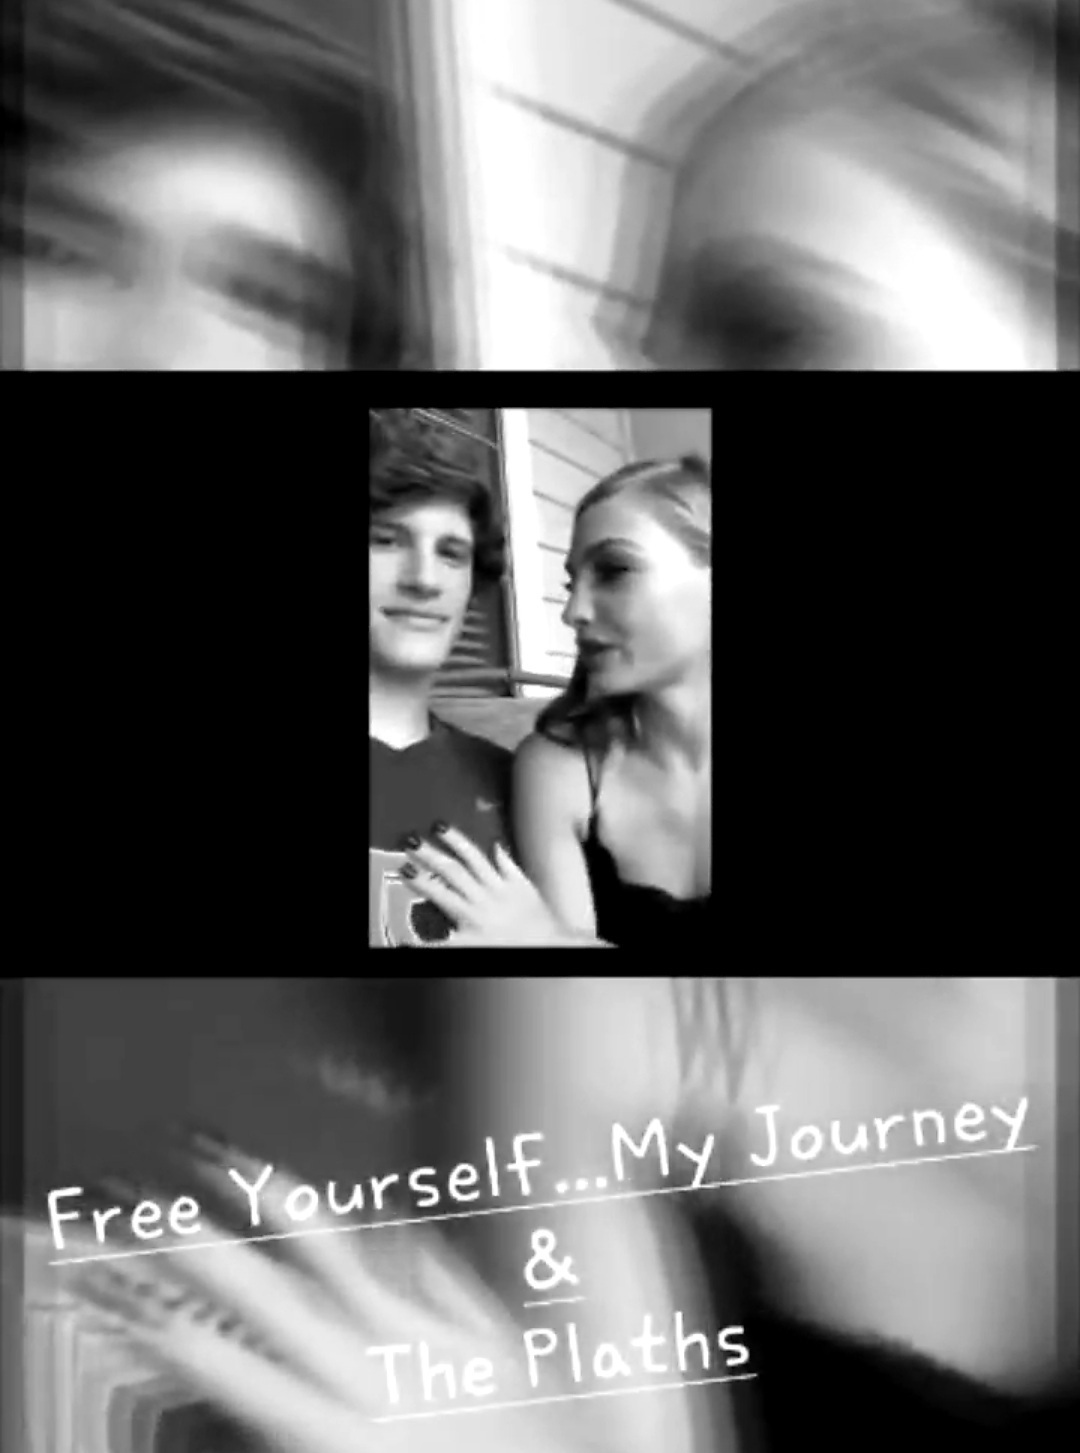 Free_YourselfMy_Journey_Plaths_Promo_1021_39c...